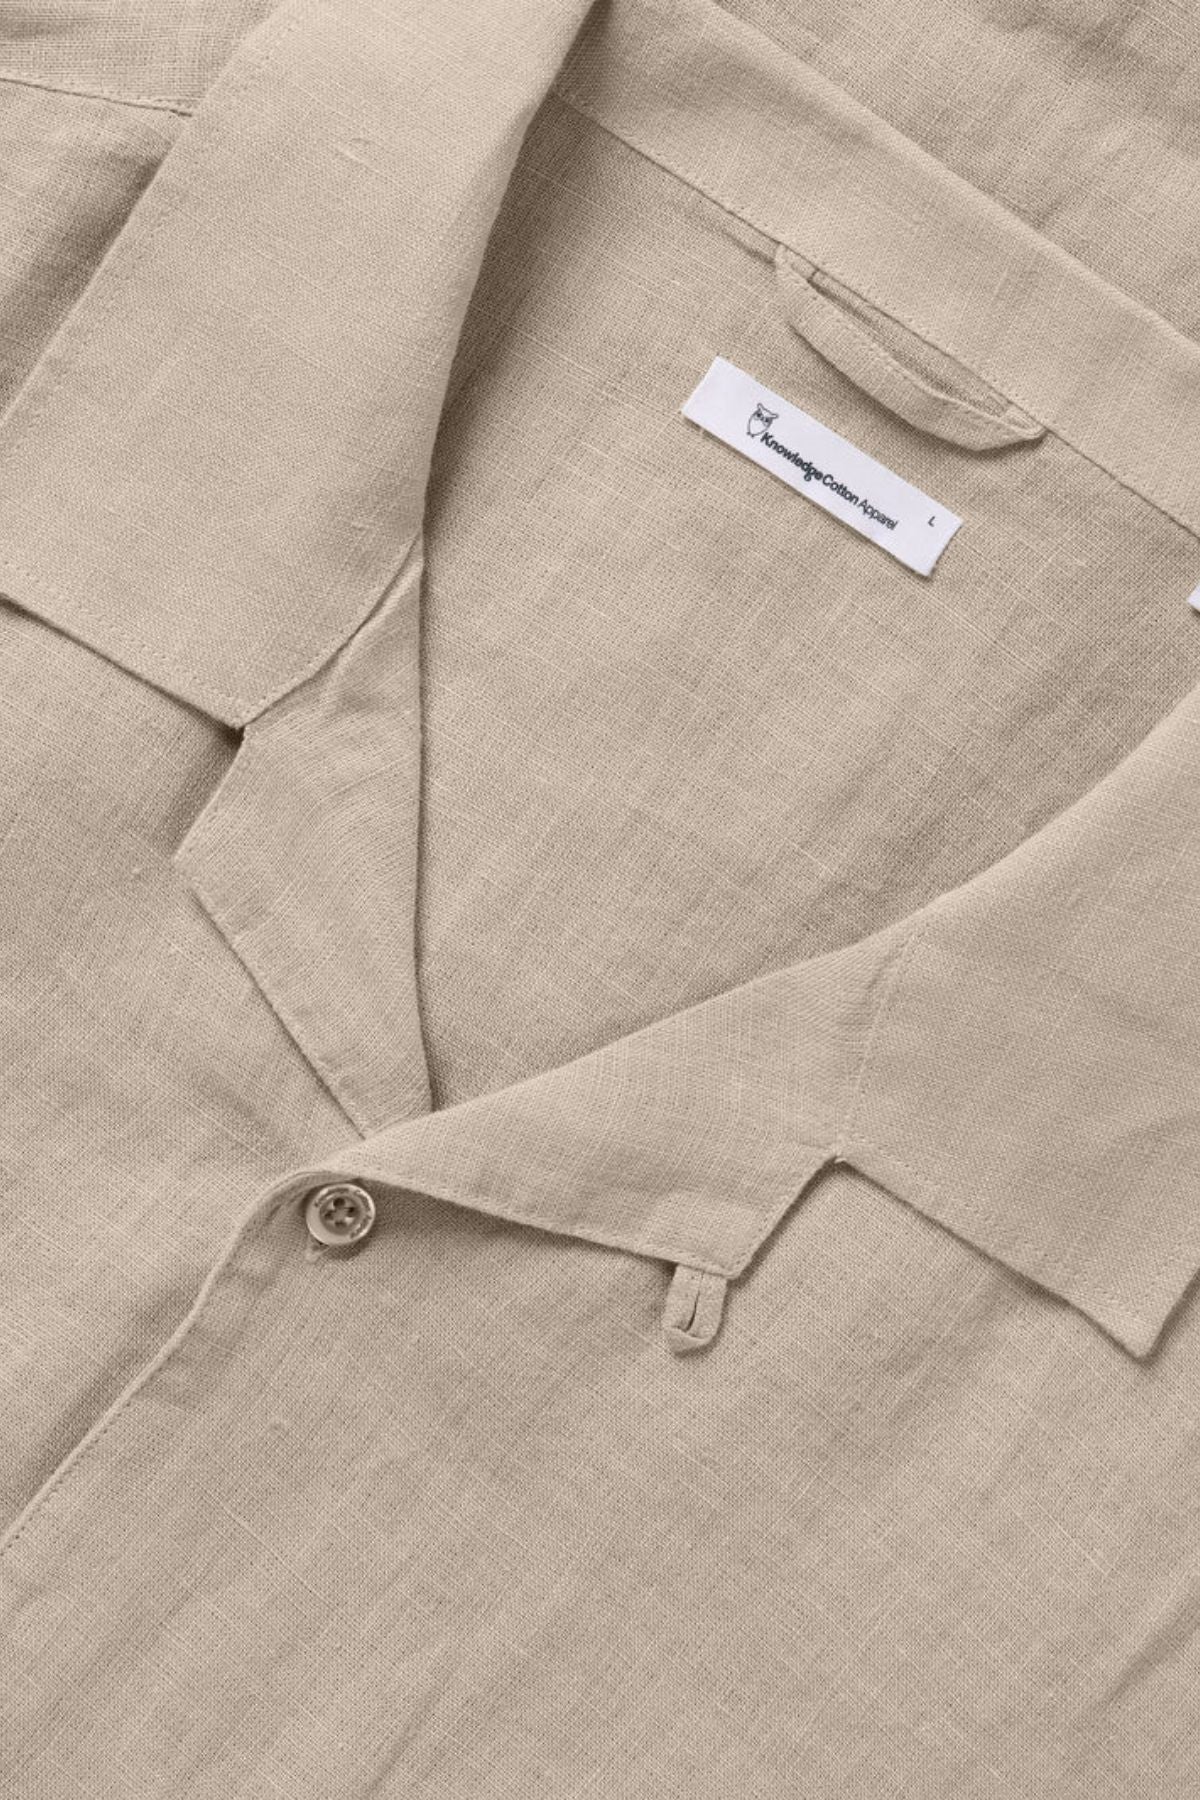 Chemise box short sleeve linen - Knowledge cotton apparel